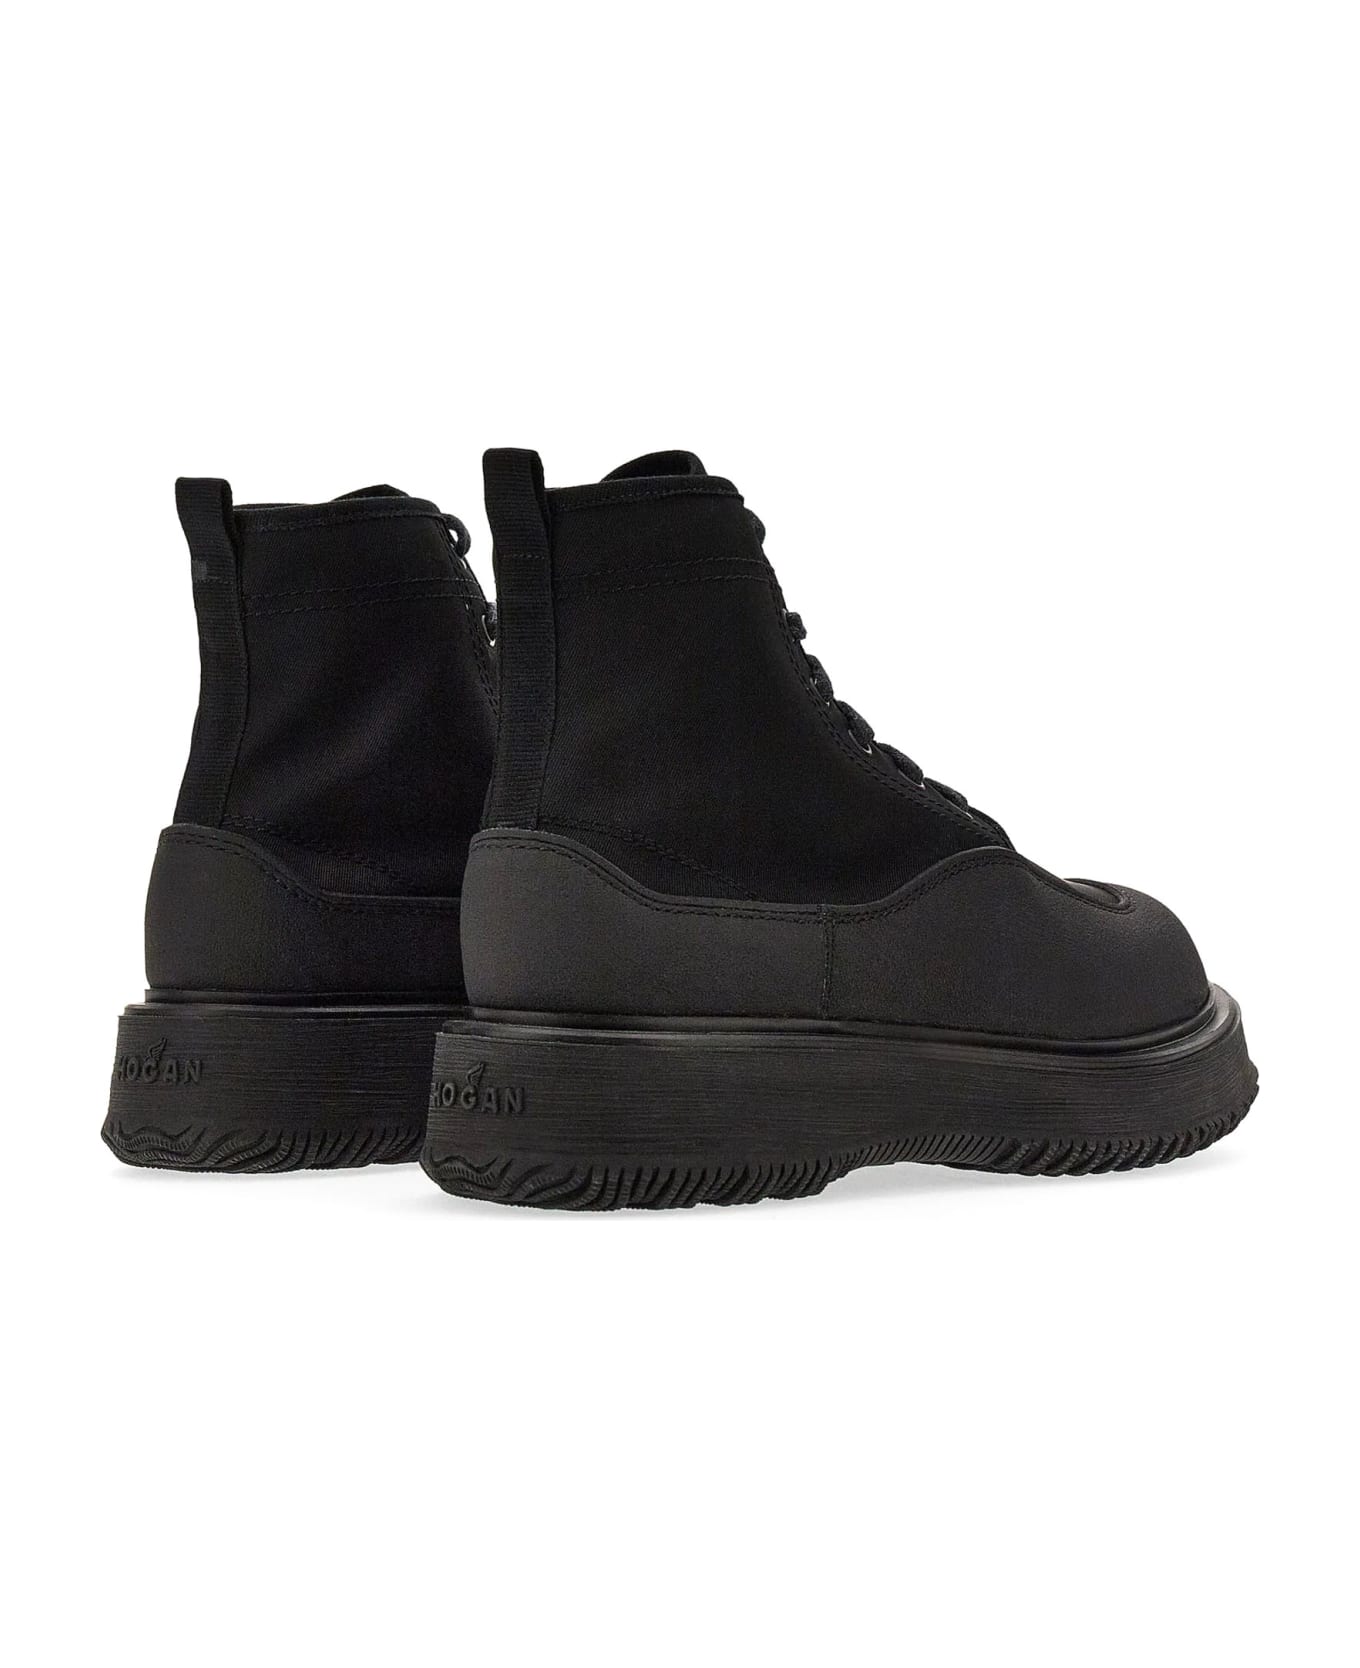 Hogan Sneakers Black - Black スニーカー